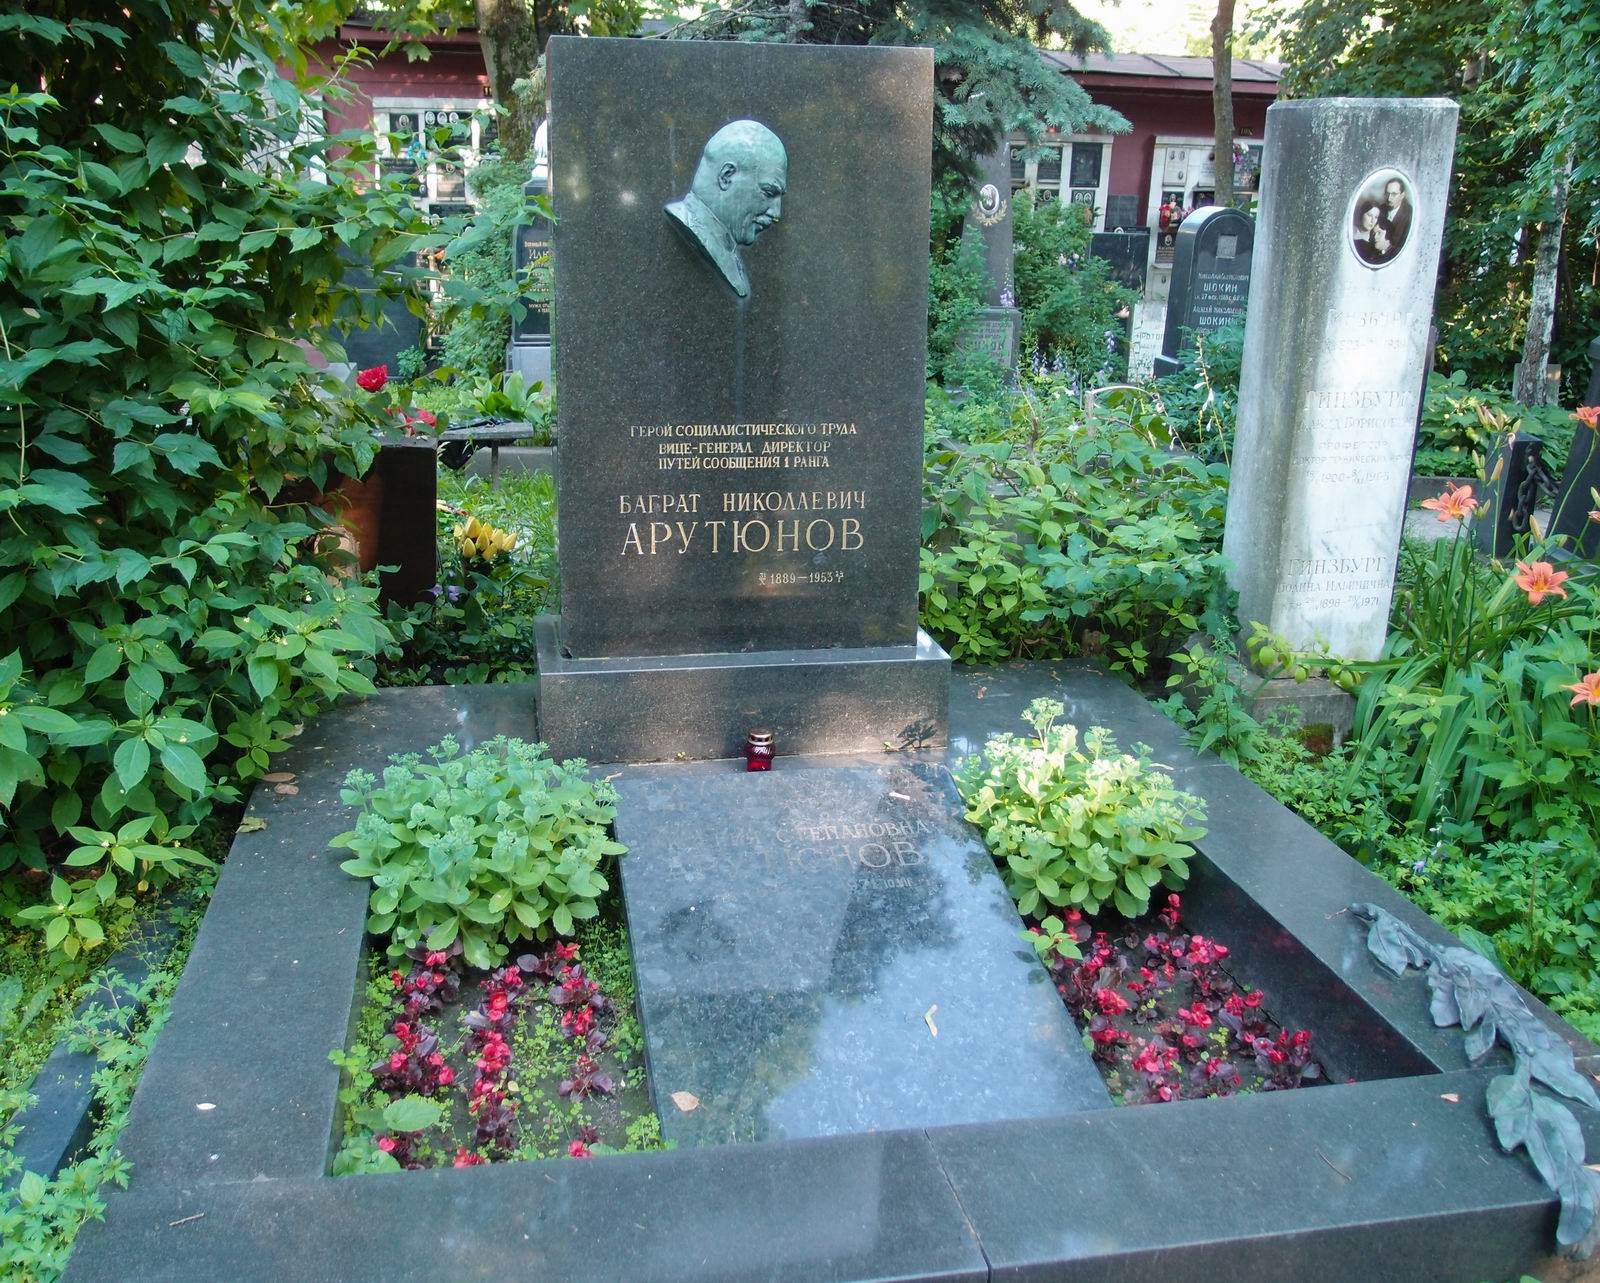 Памятник на могиле Арутюнова Б.Н. (1889-1953), ск. Н.Никогосян, на Новодевичьем кладбище (2-38-13).